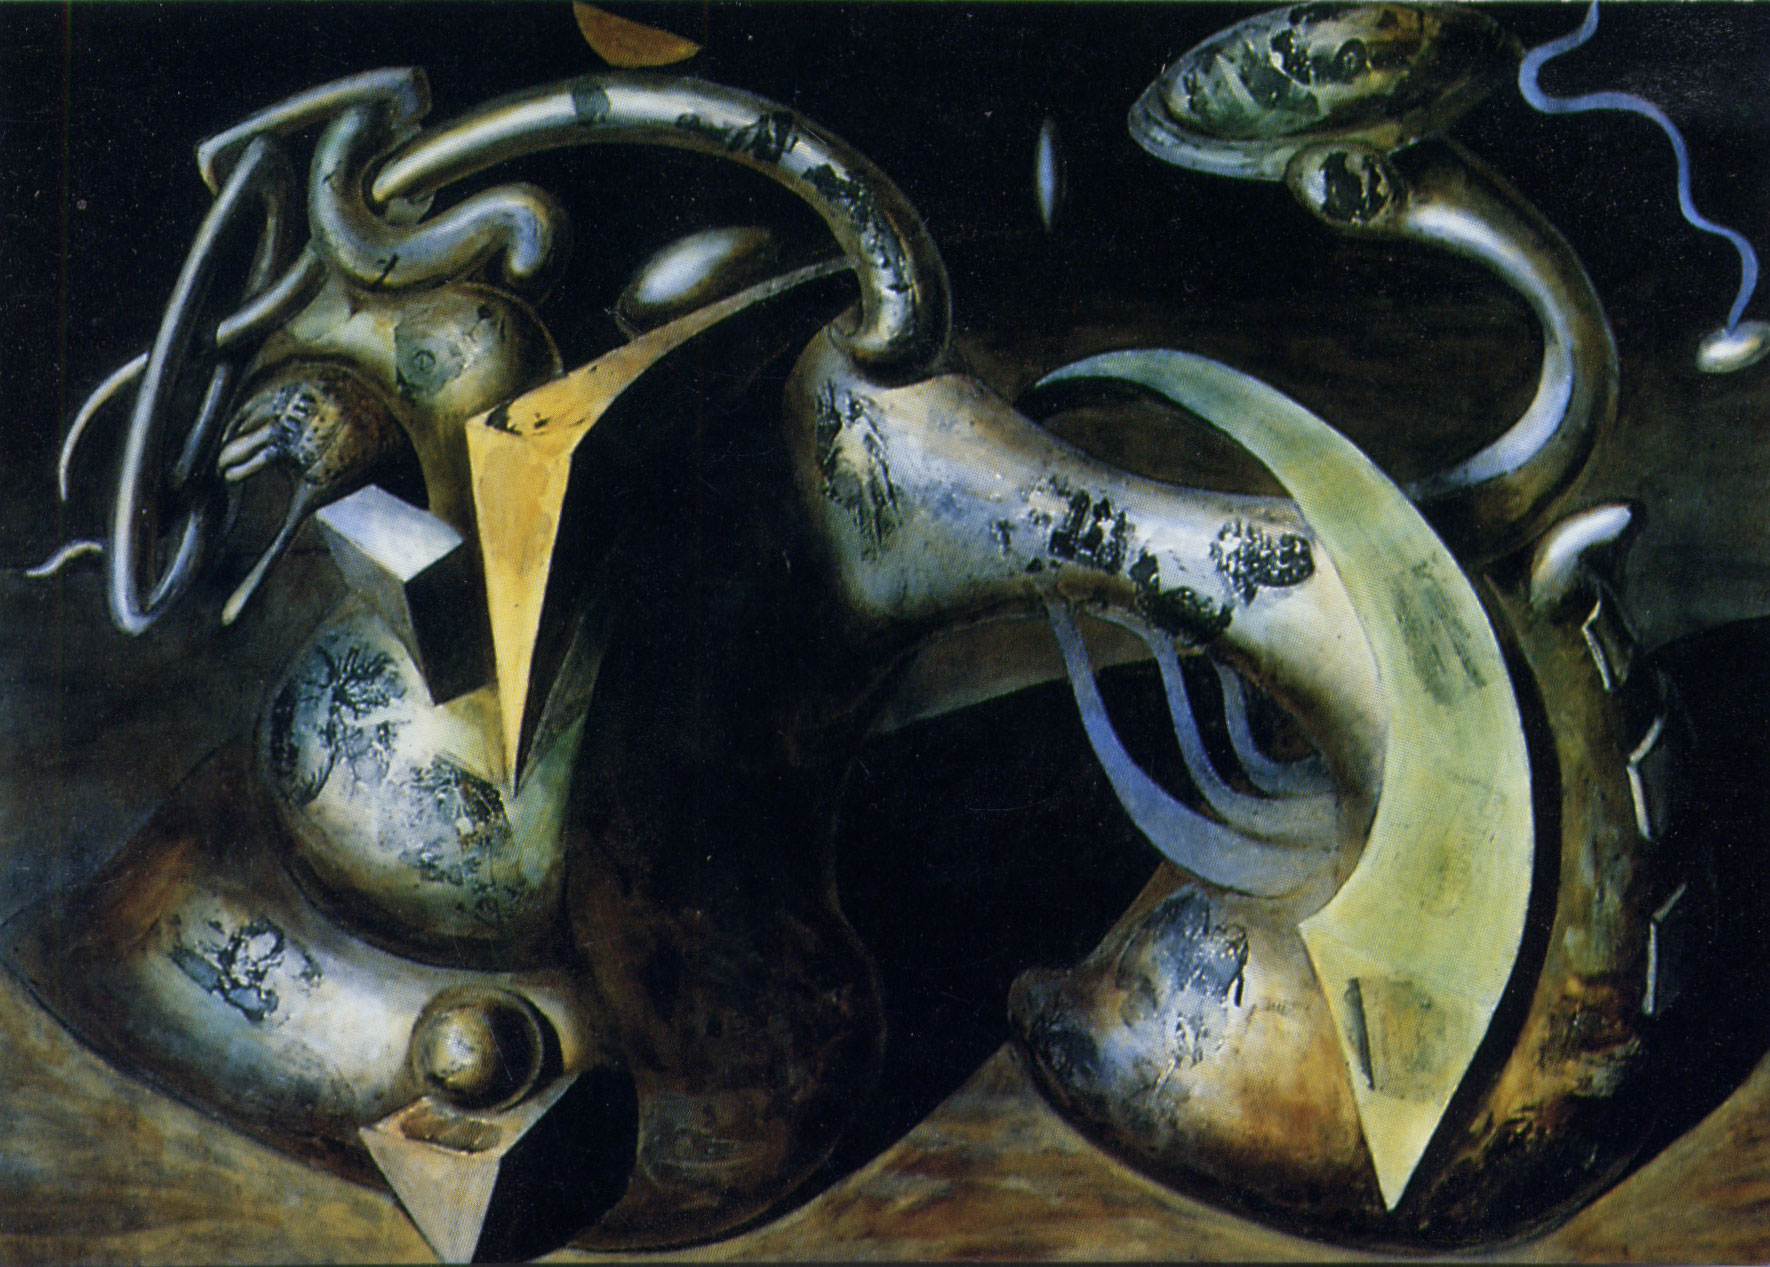 Oil on canvas, 1991.